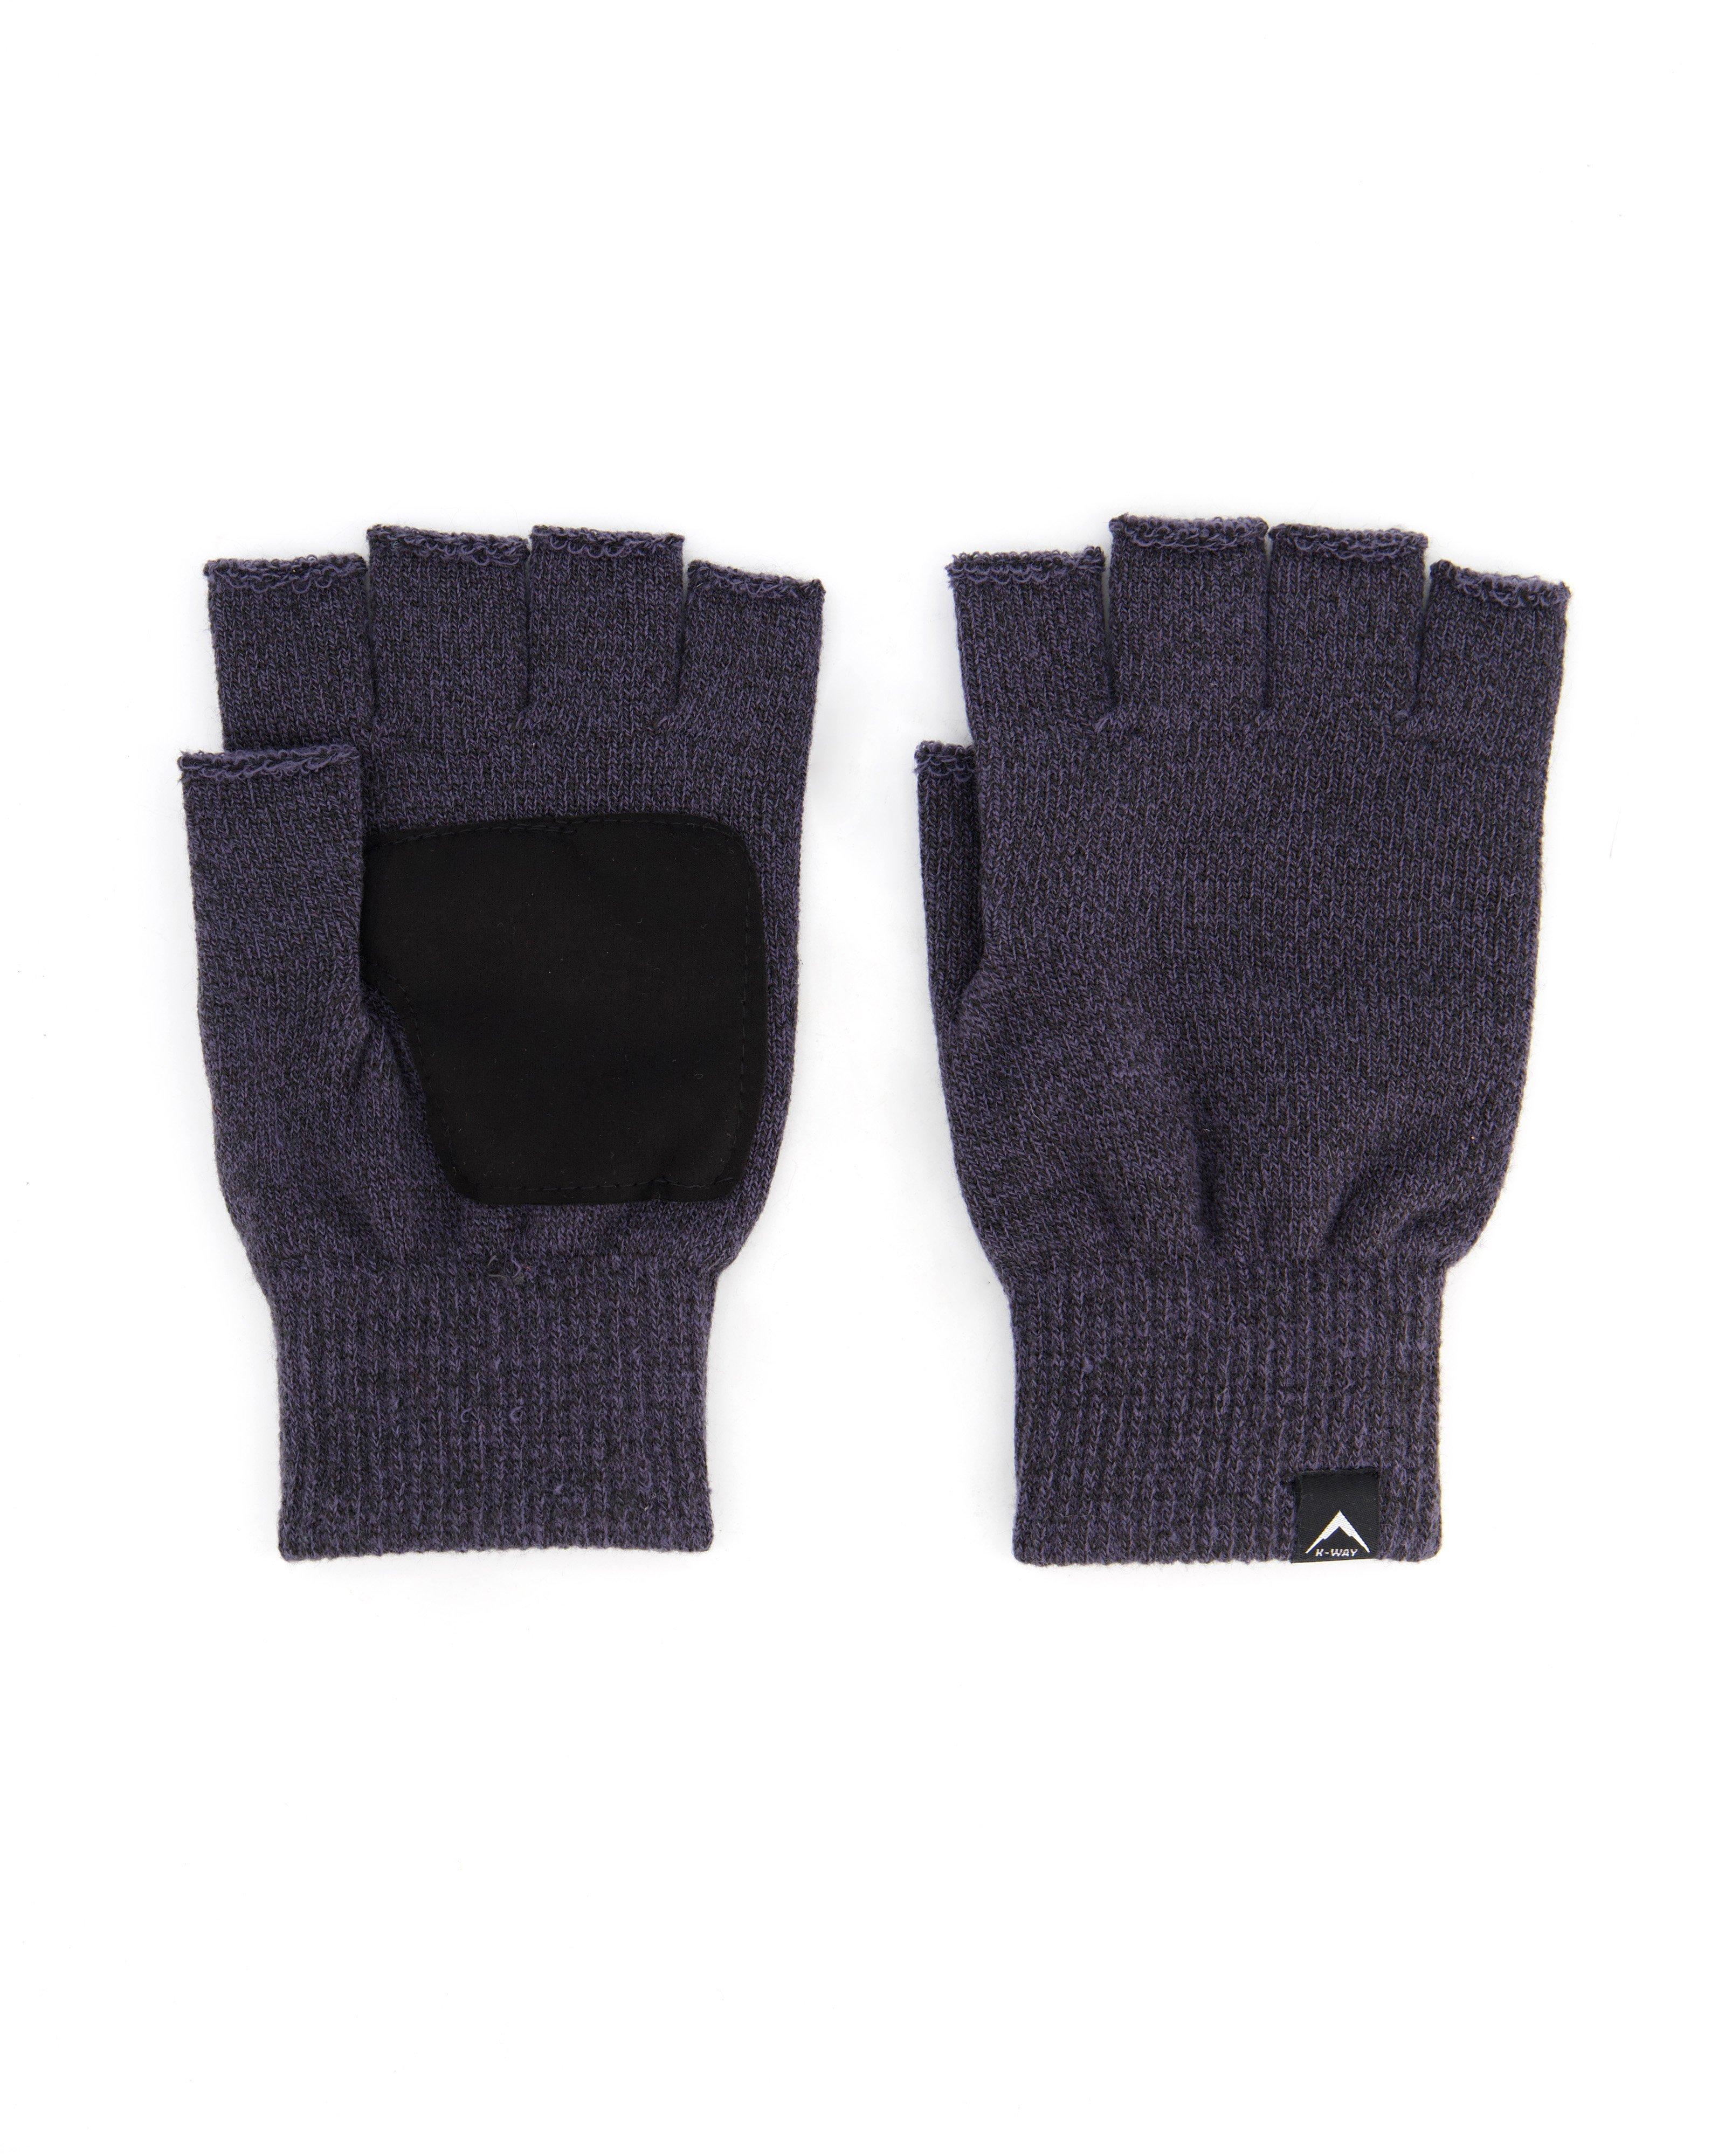 K-Way Rowan 2.0 Fingerless Gloves -  Graphite